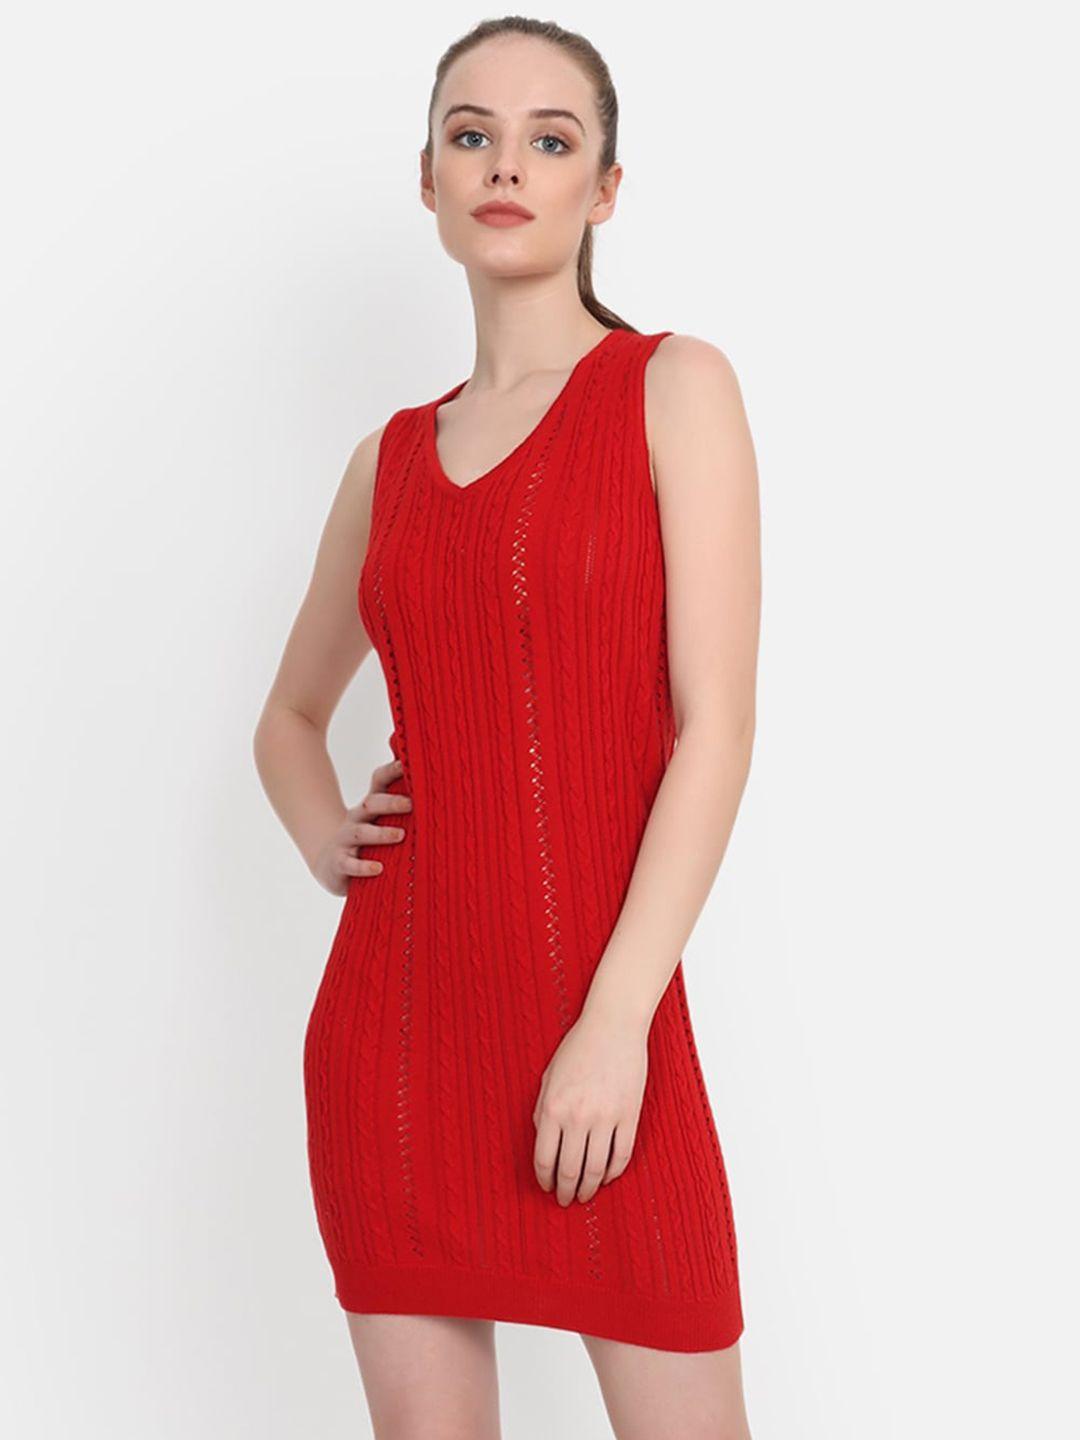 joe hazel red self design sheath dress